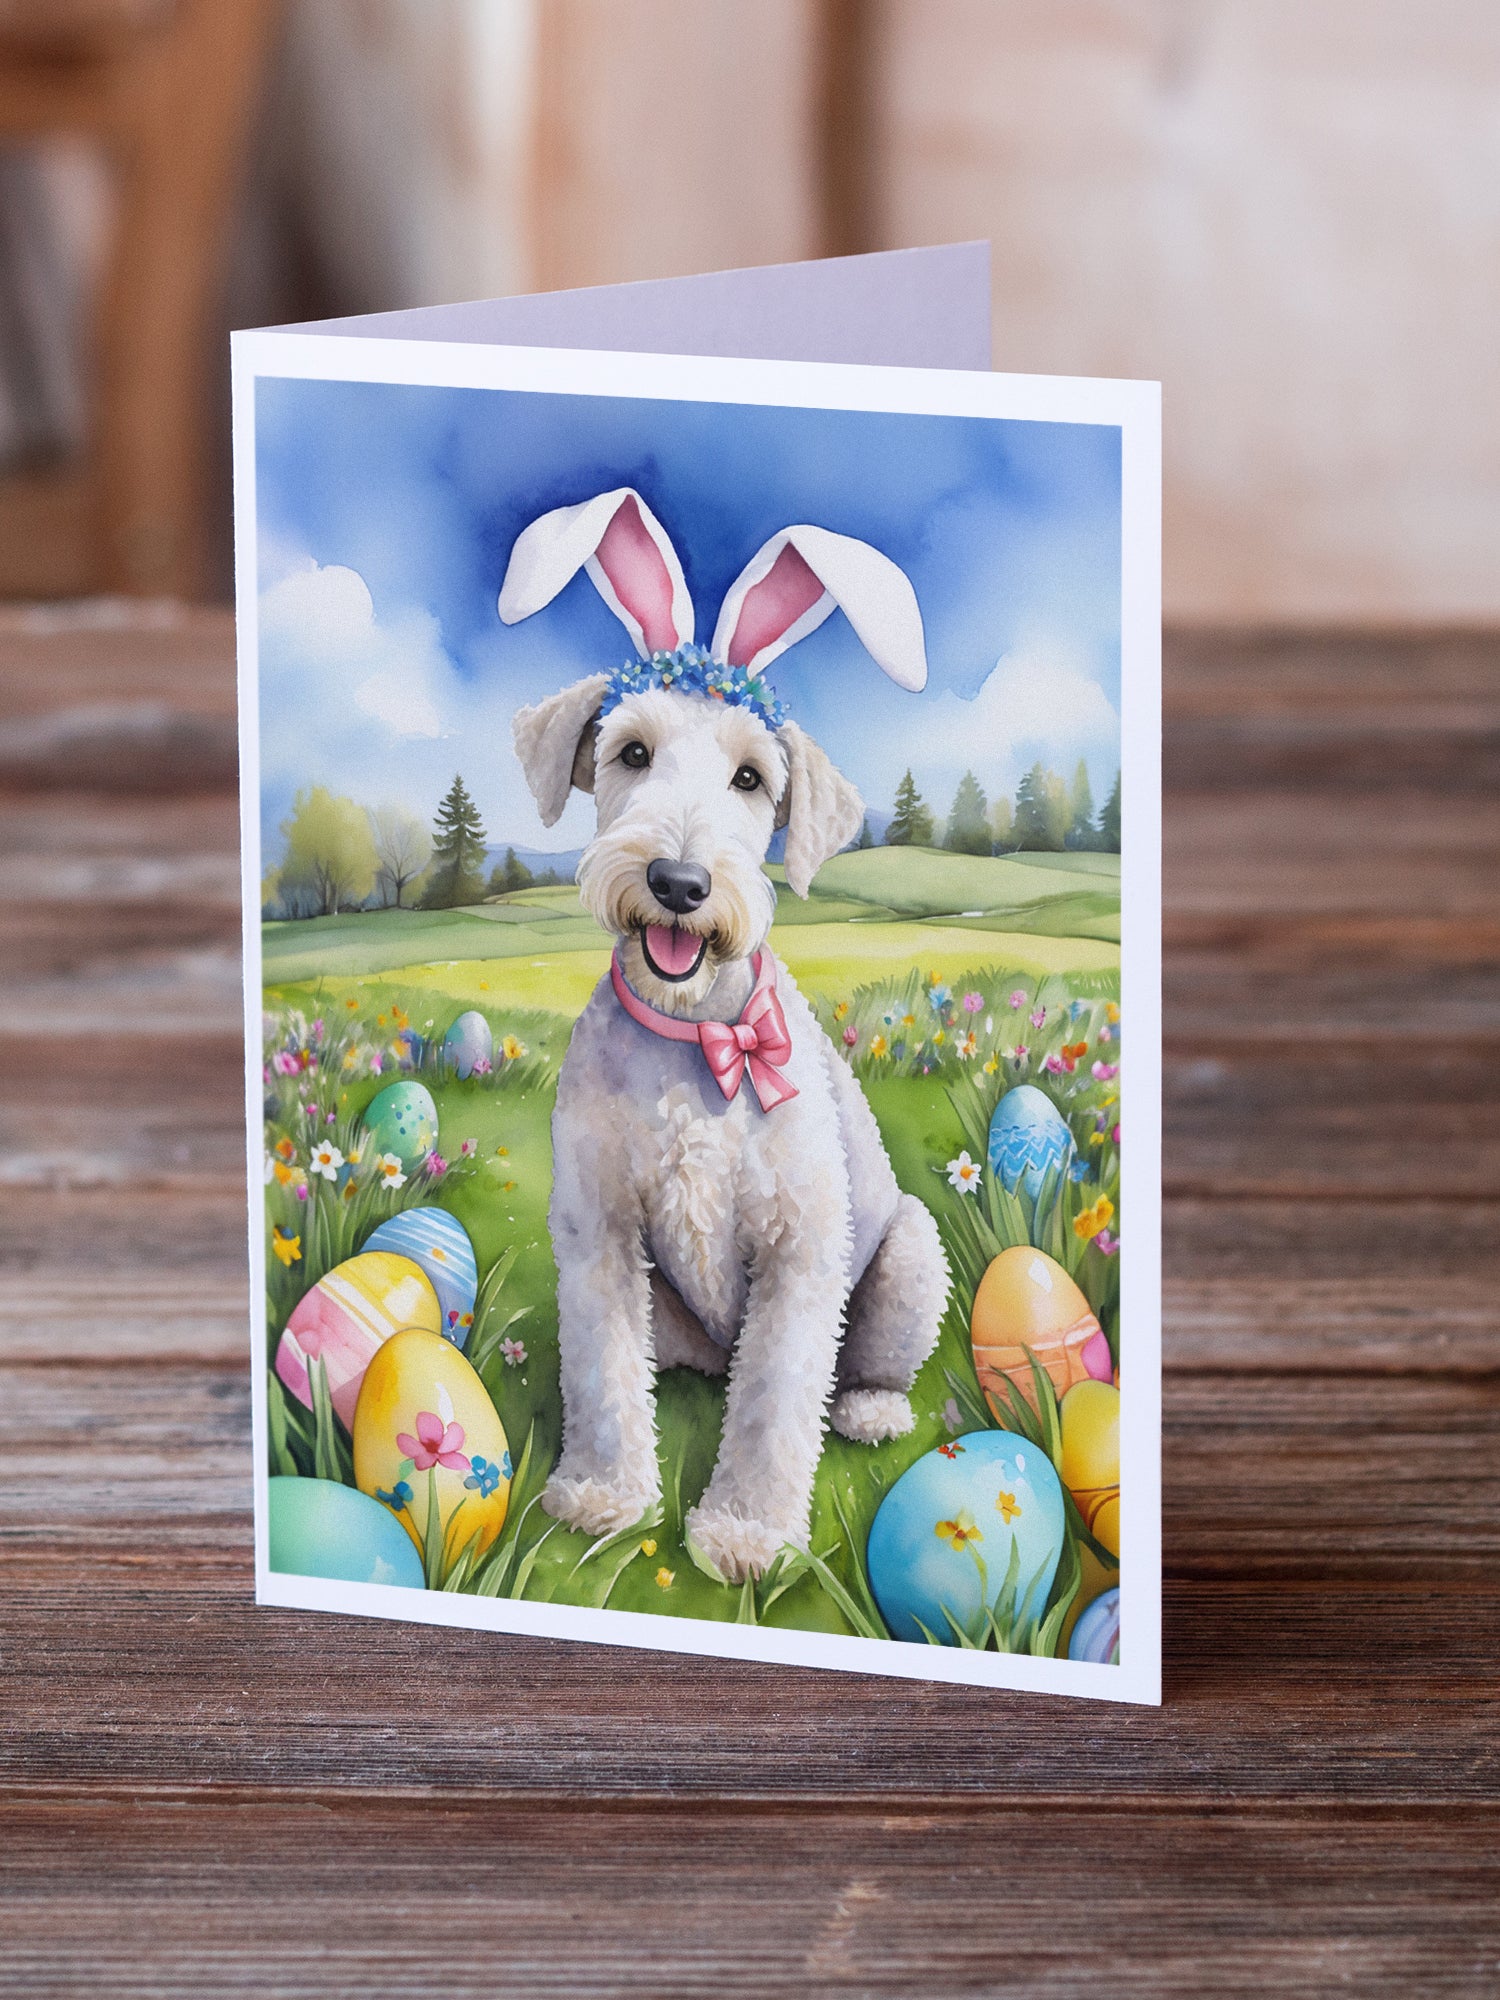 Bedlington Terrier Easter Egg Hunt Greeting Cards Pack of 8